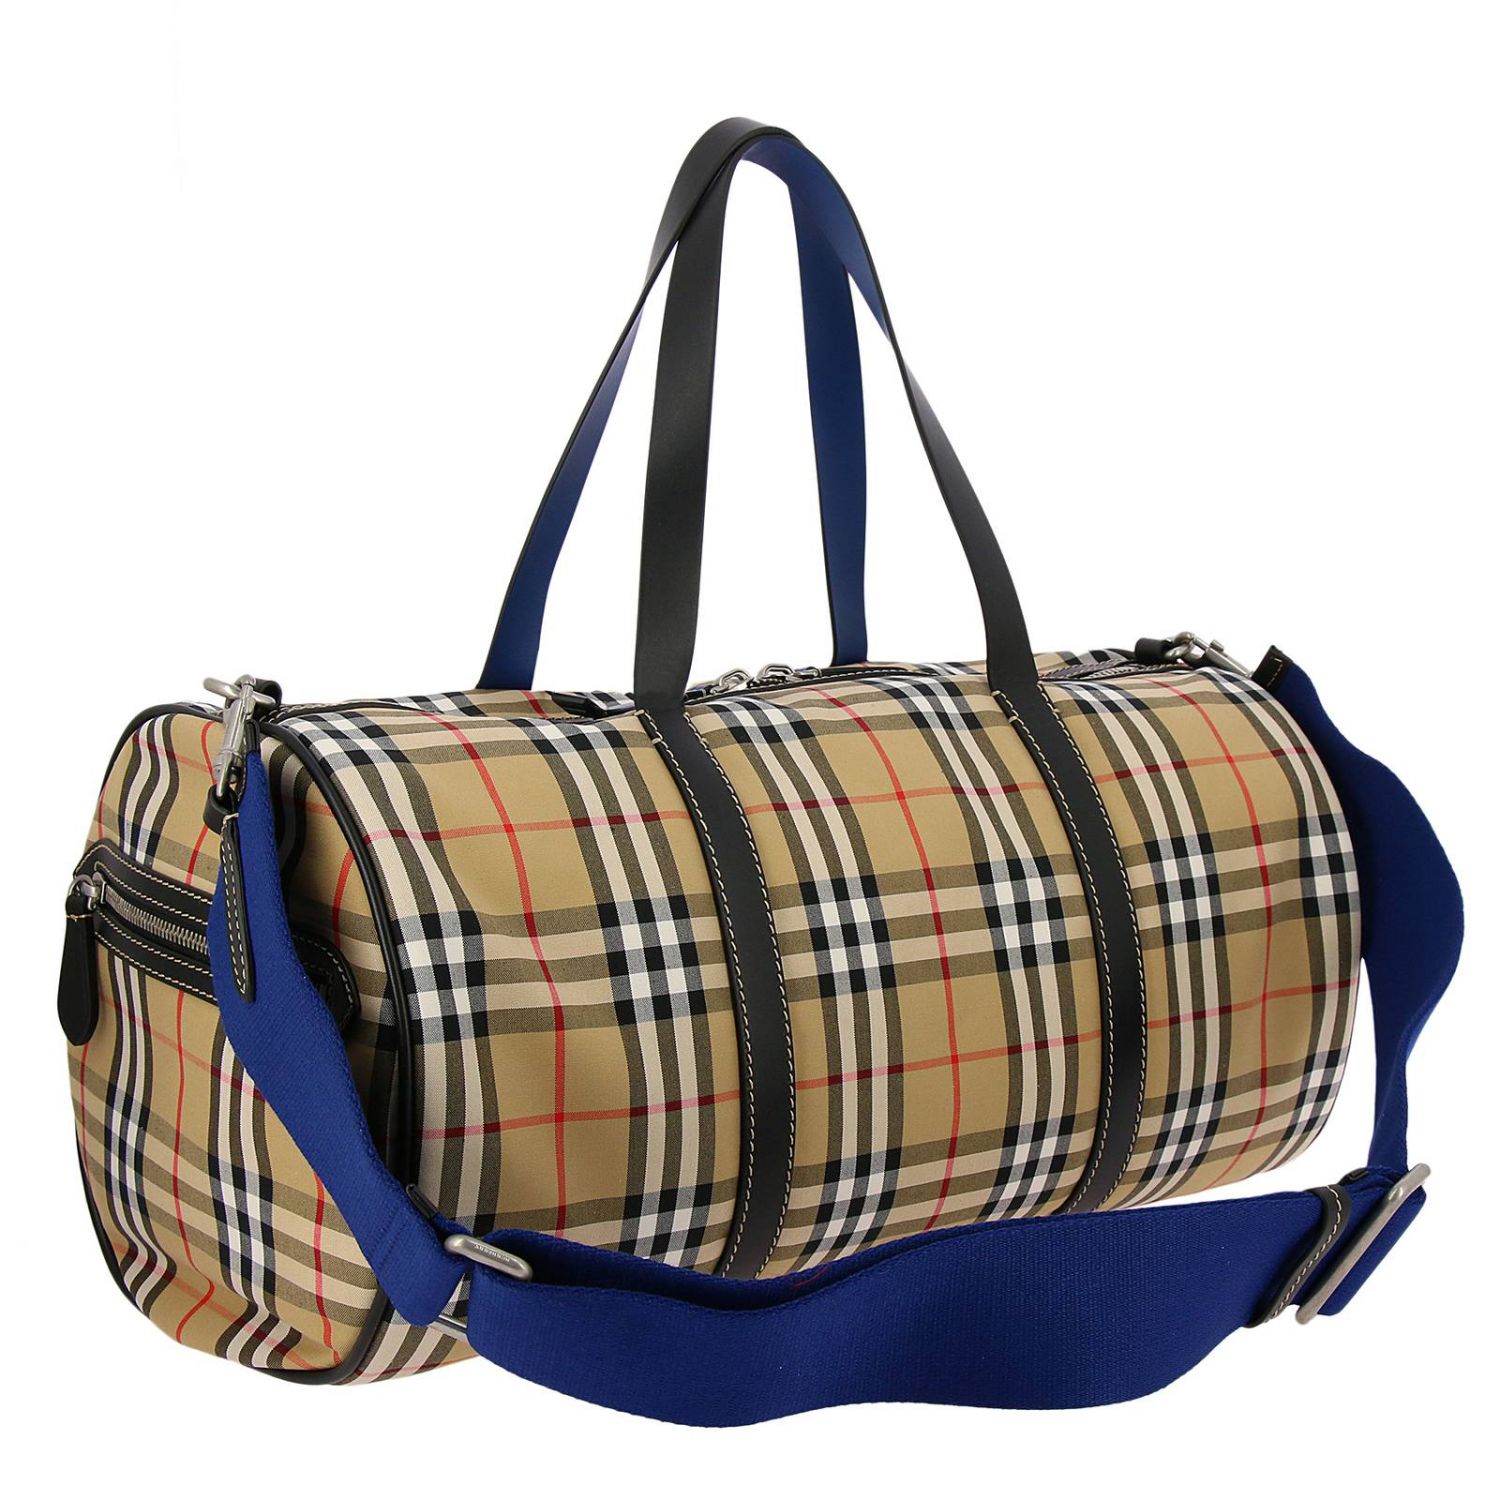 Burberry Outlet: Bags men | Travel Bag Burberry Men Beige | Travel Bag ...